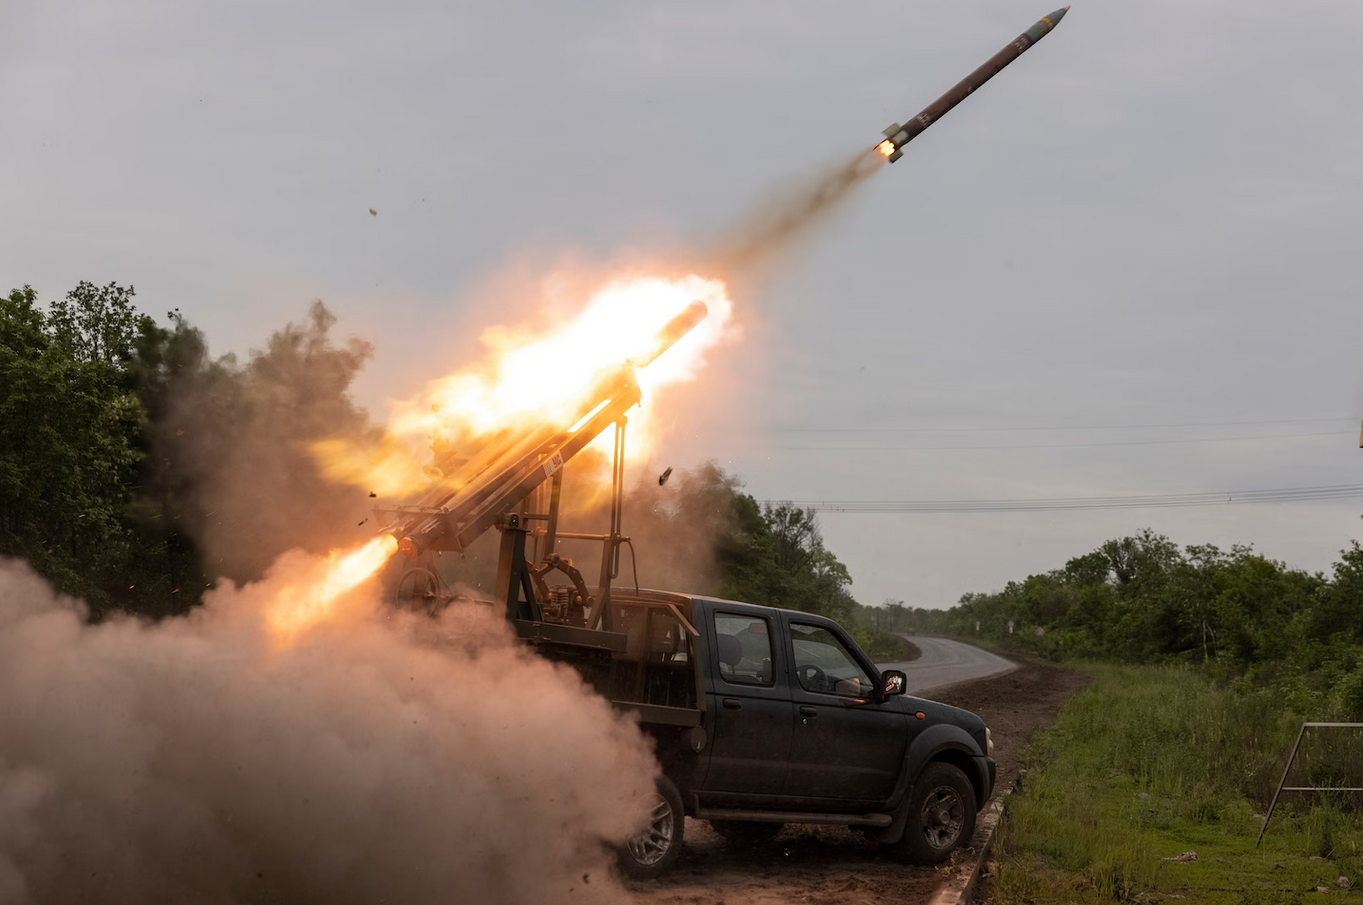 Ukrainian Armed Forces use unique Cerberus multiple rocket launcher system based on civilian pickup truck